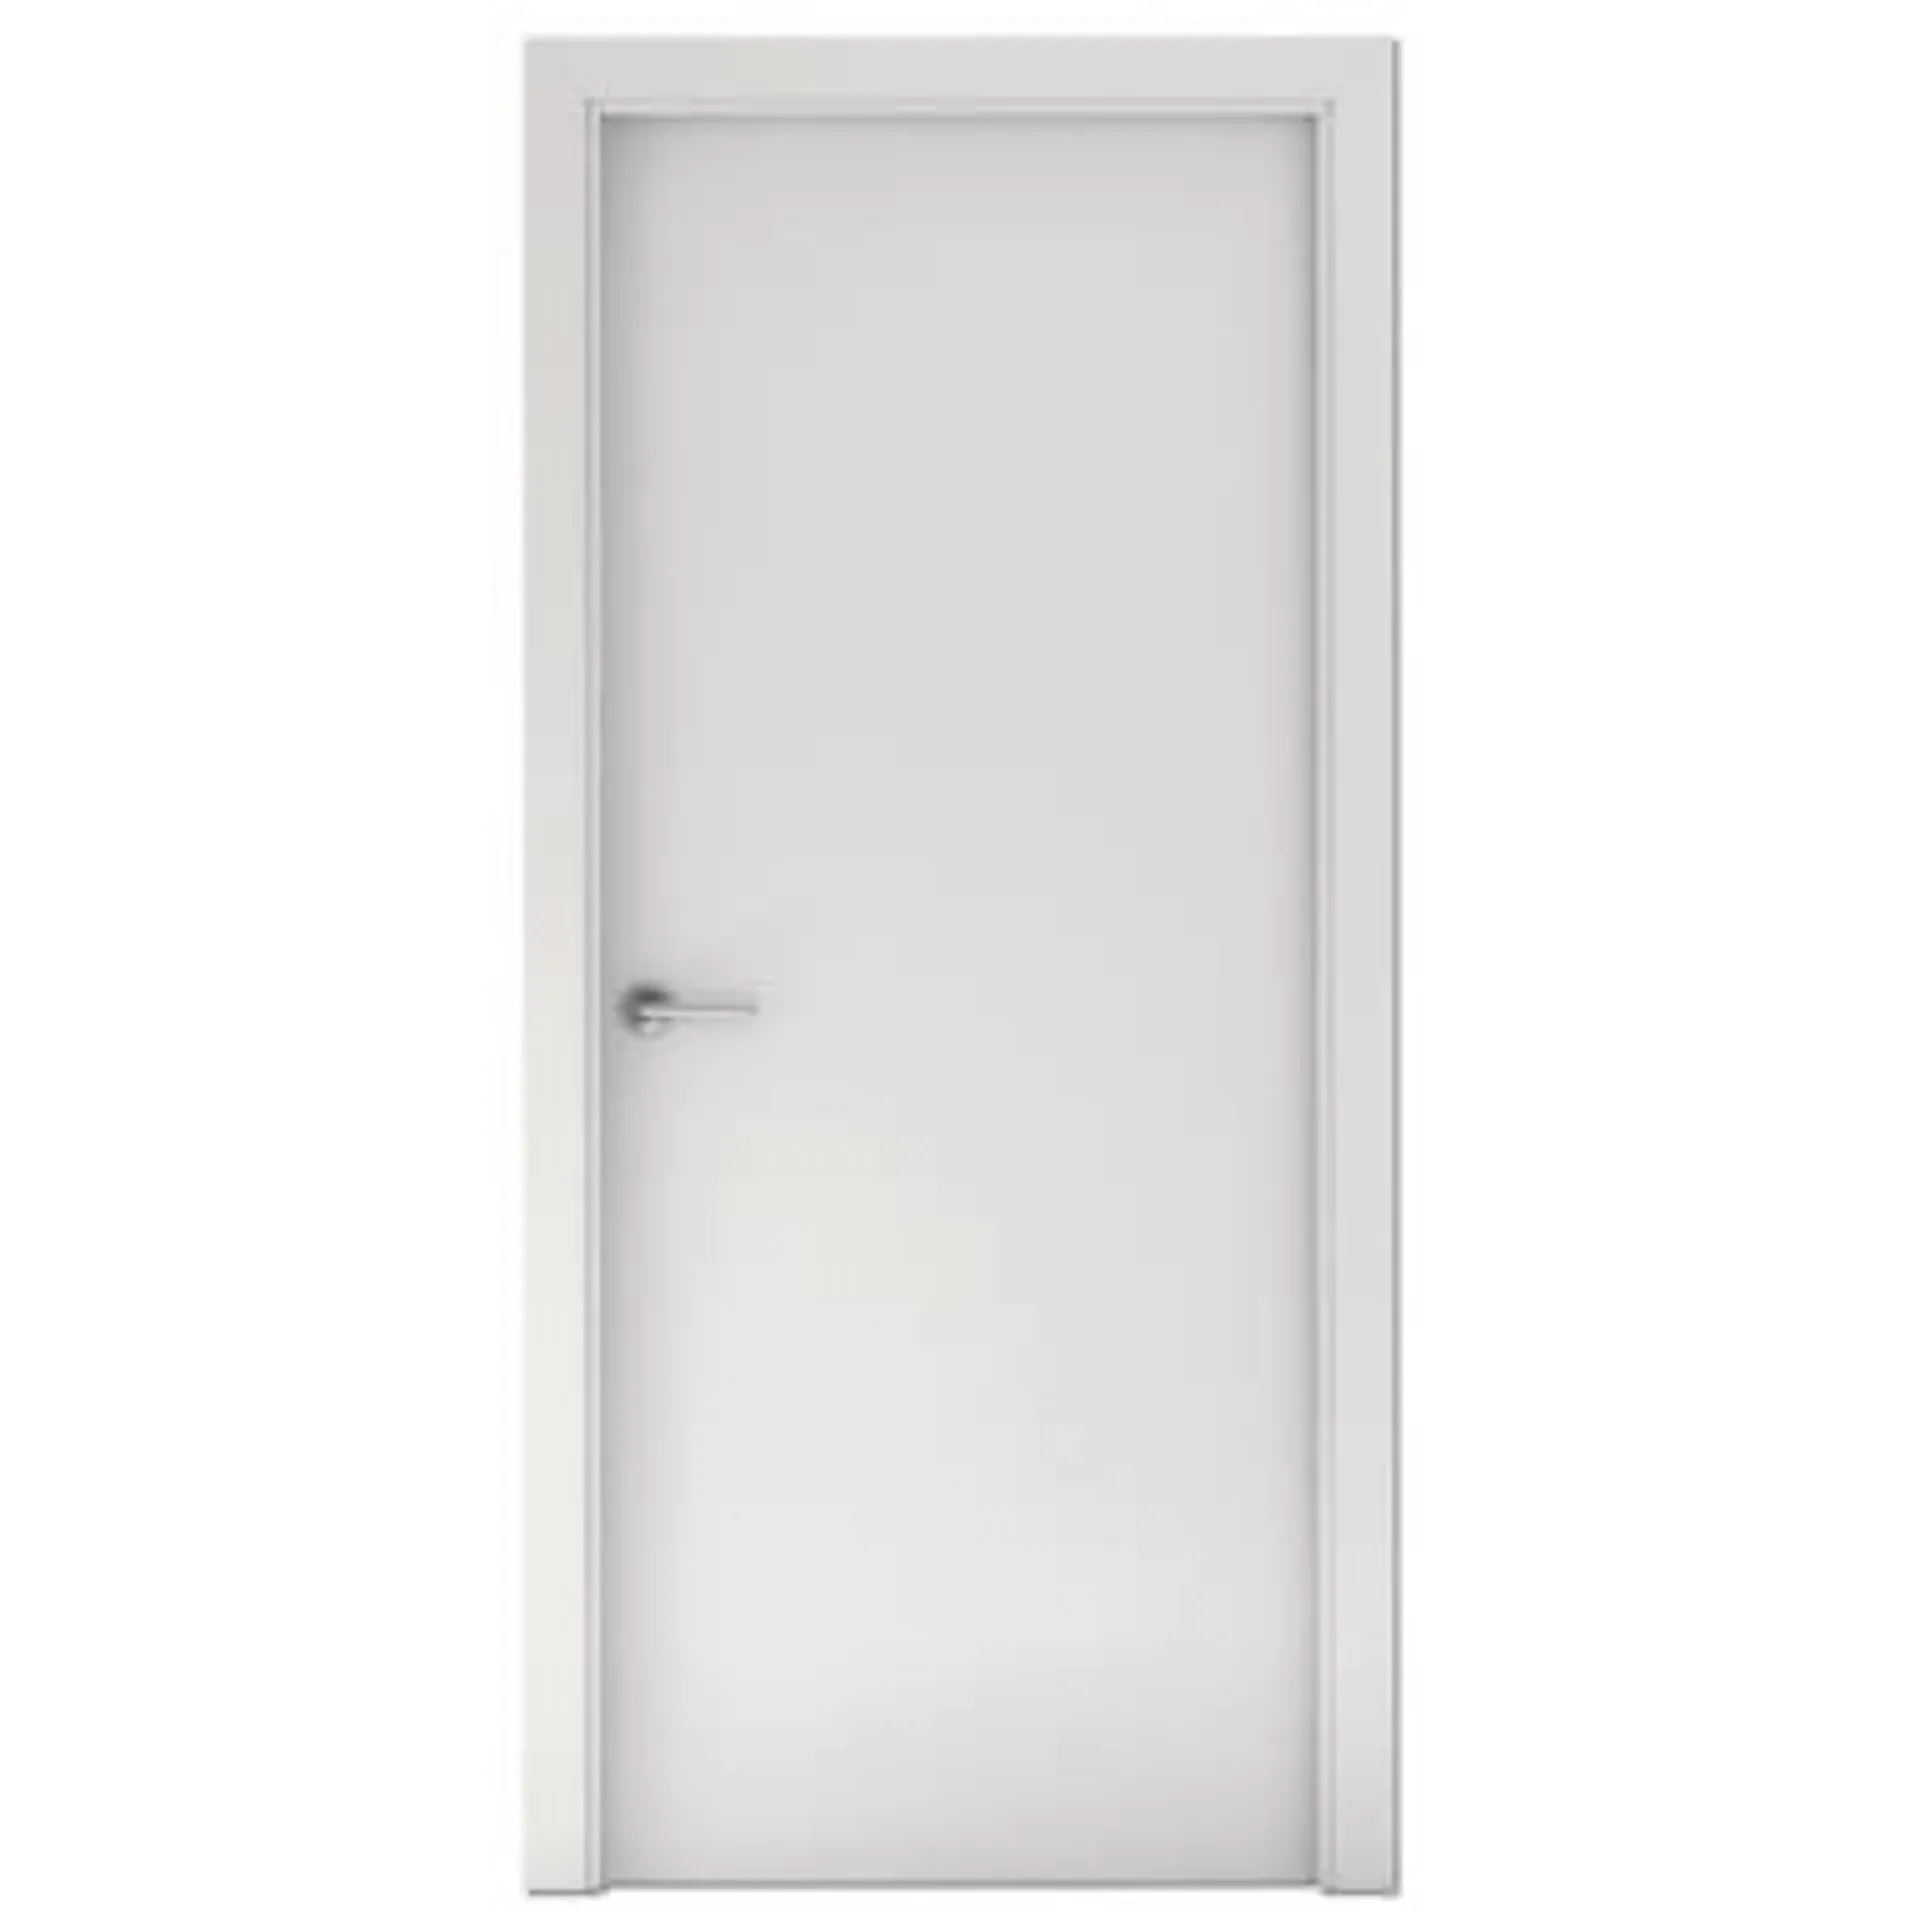 Puerta Carina blanco derecha 82,5 cm